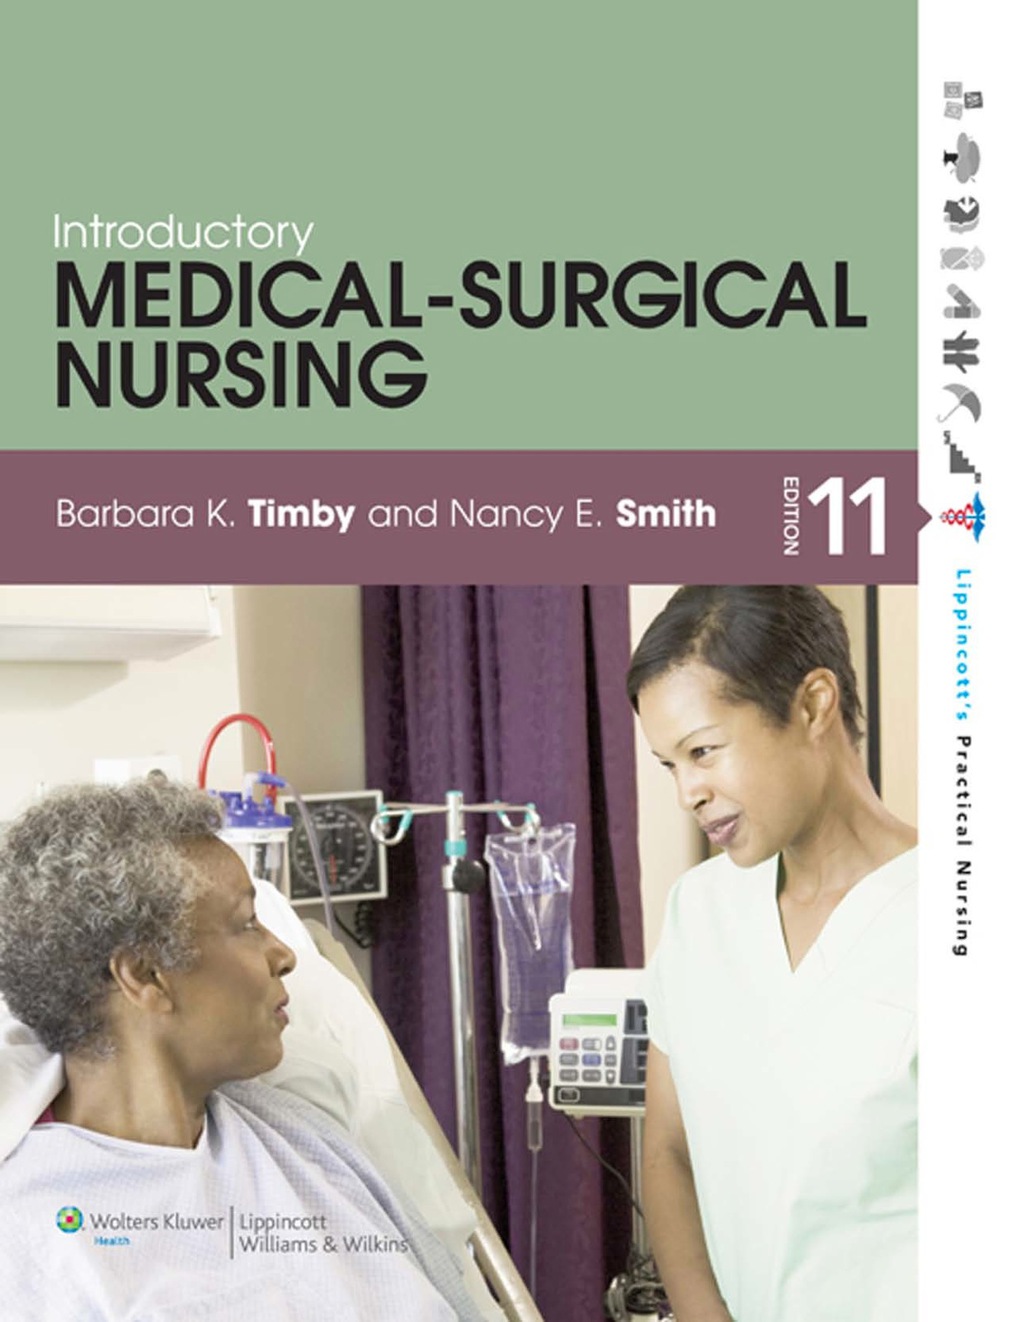 Introductory Medical-Surgical Nursing (eBook) - Barbara K. Timby; Nancy E. Smith